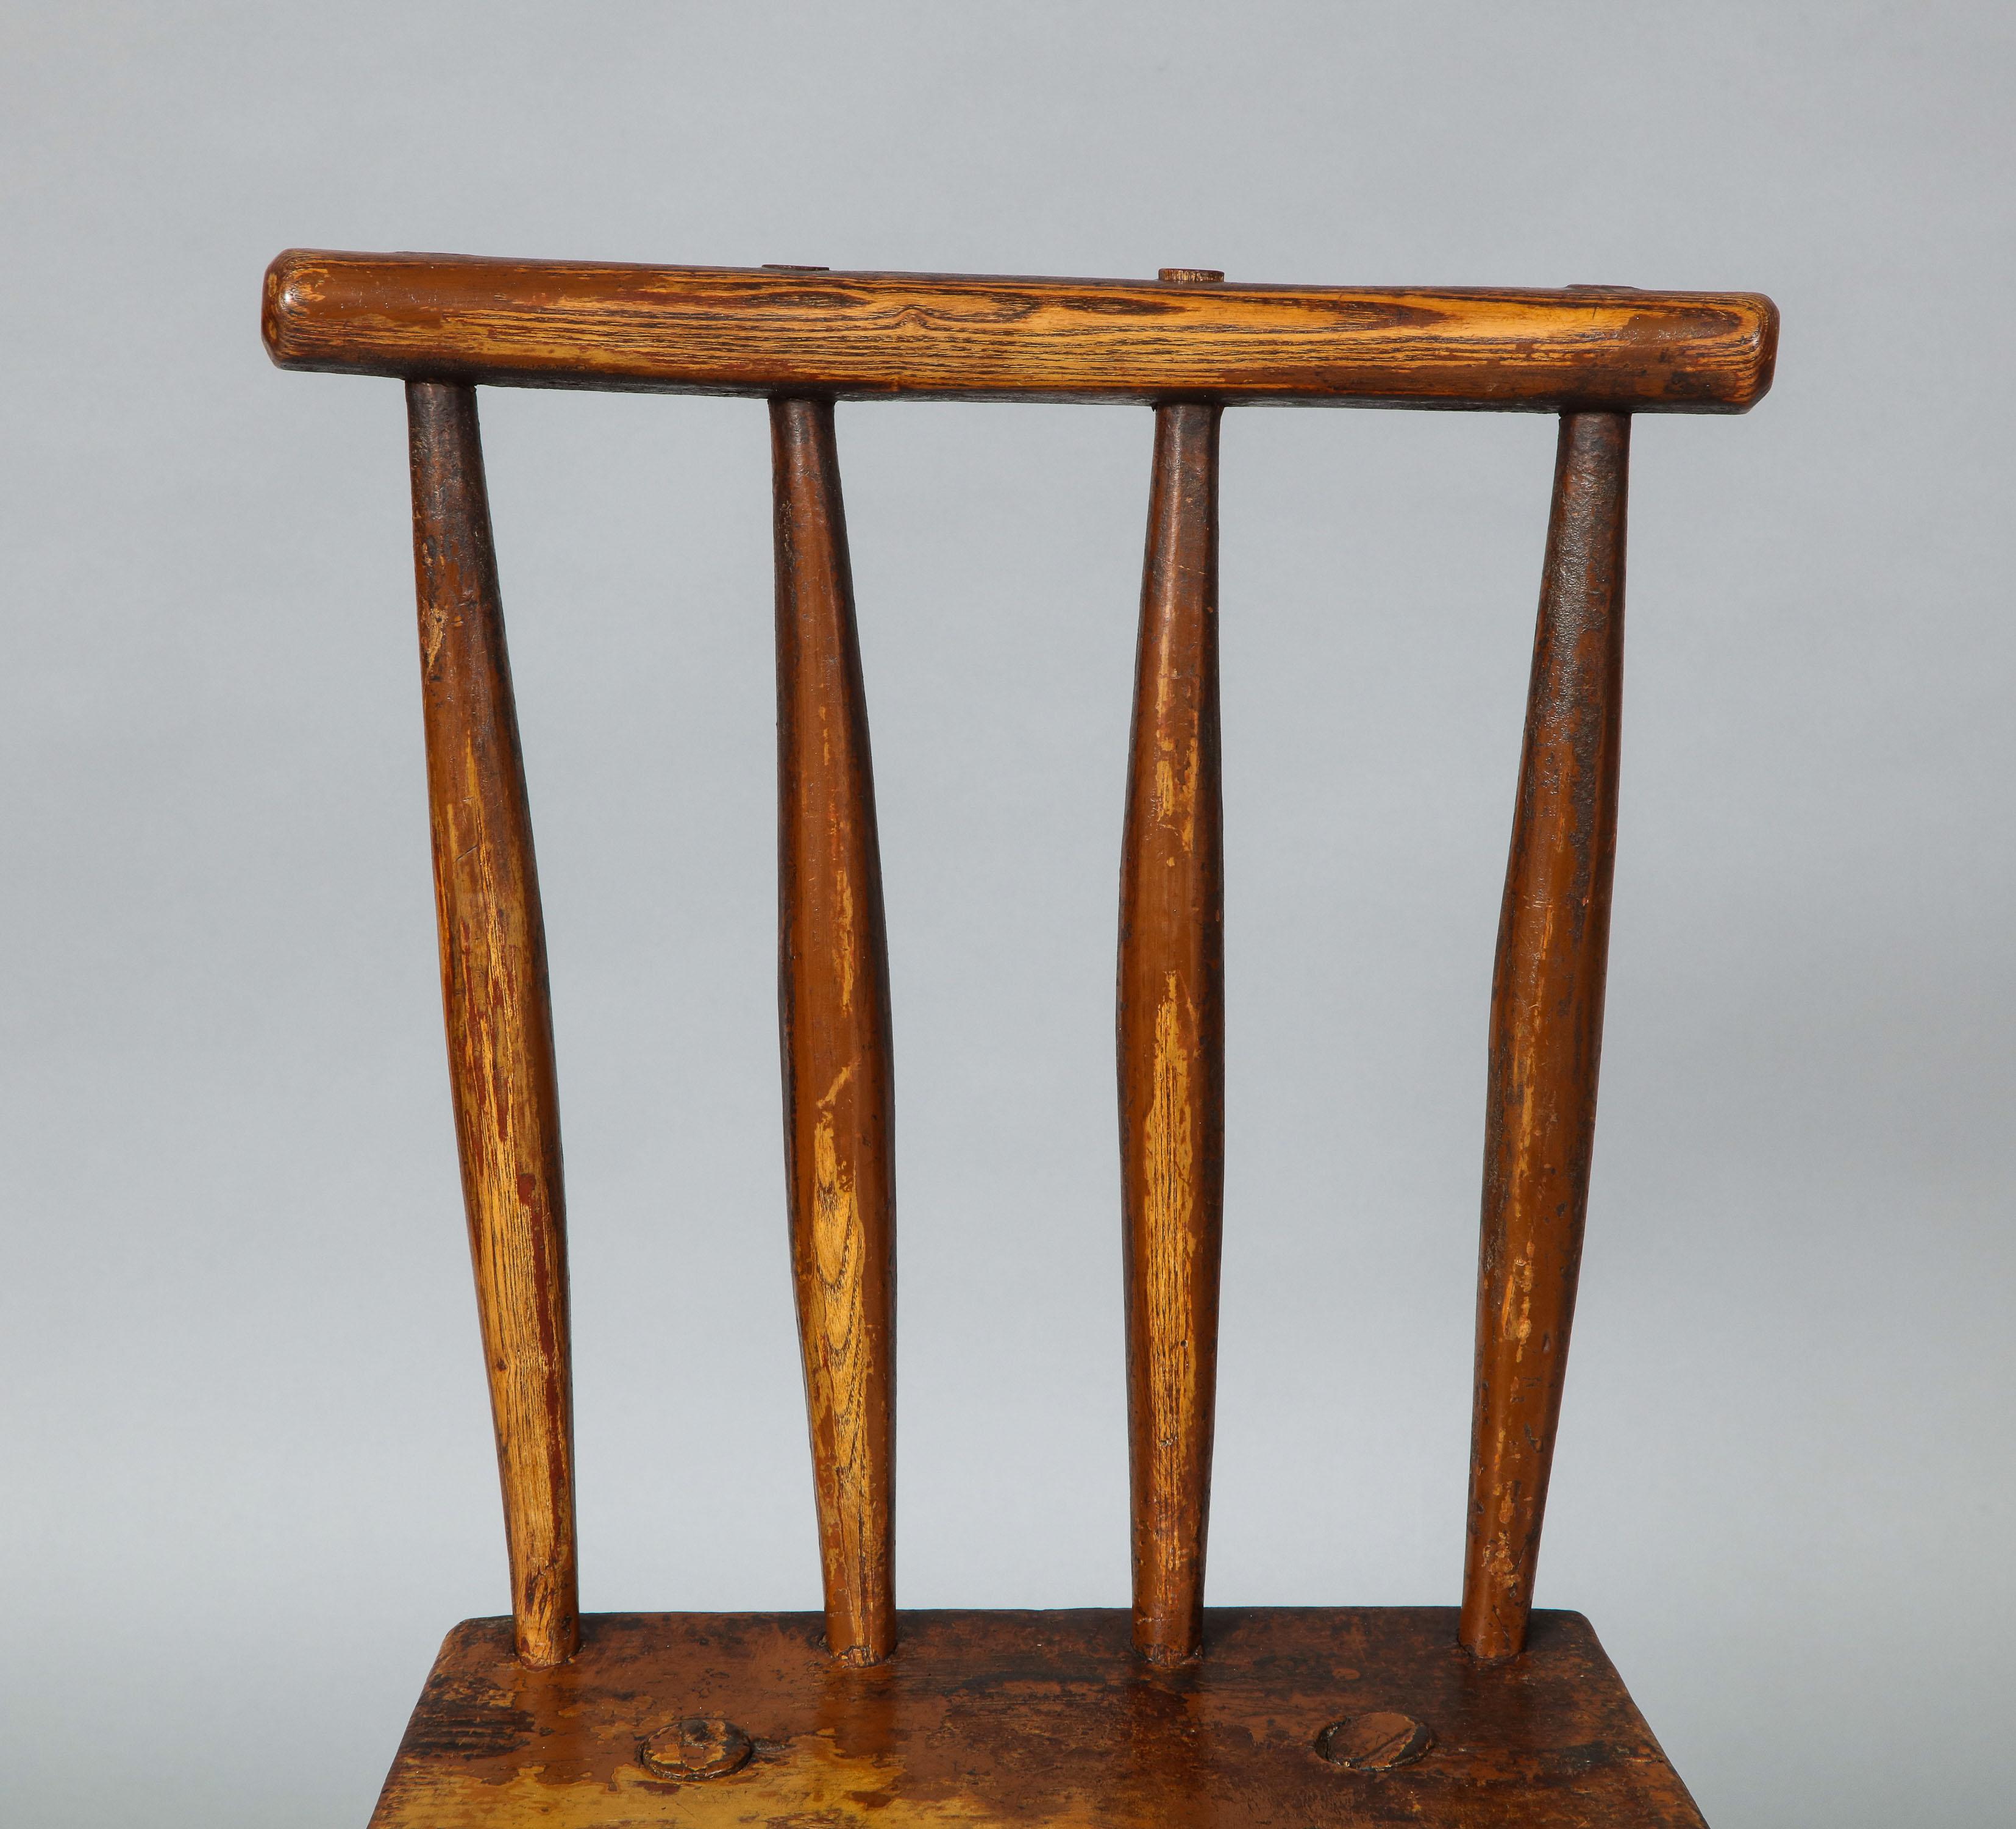 Welsh Charming Rustic Diminutive Windsor Chair